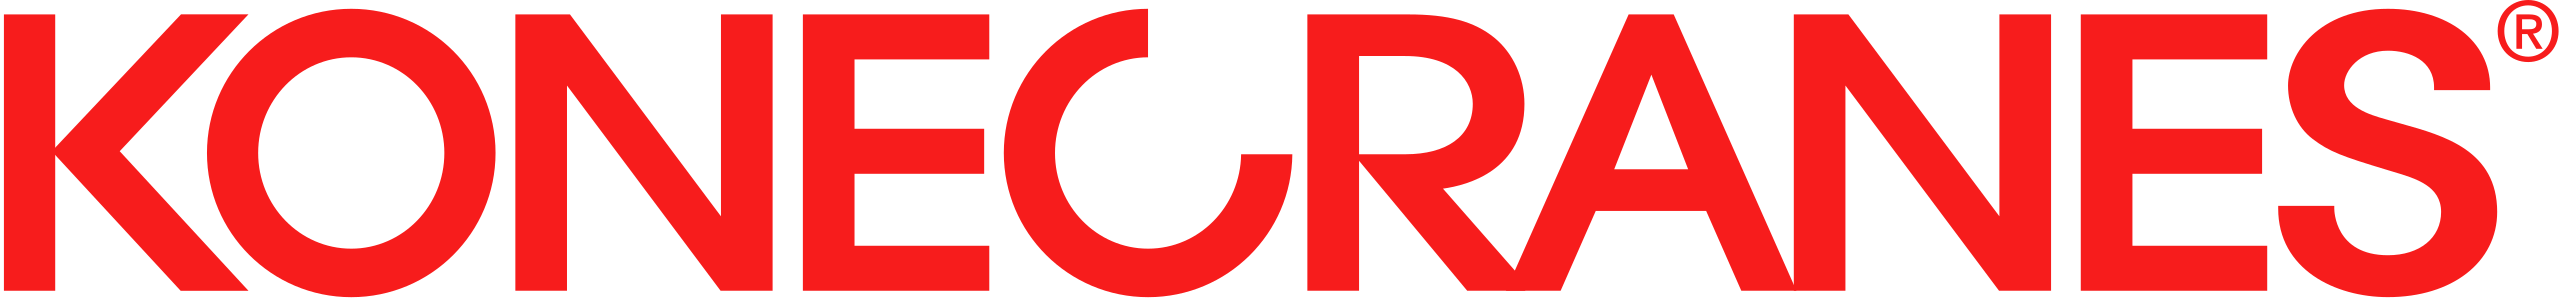 Konecranes Logo